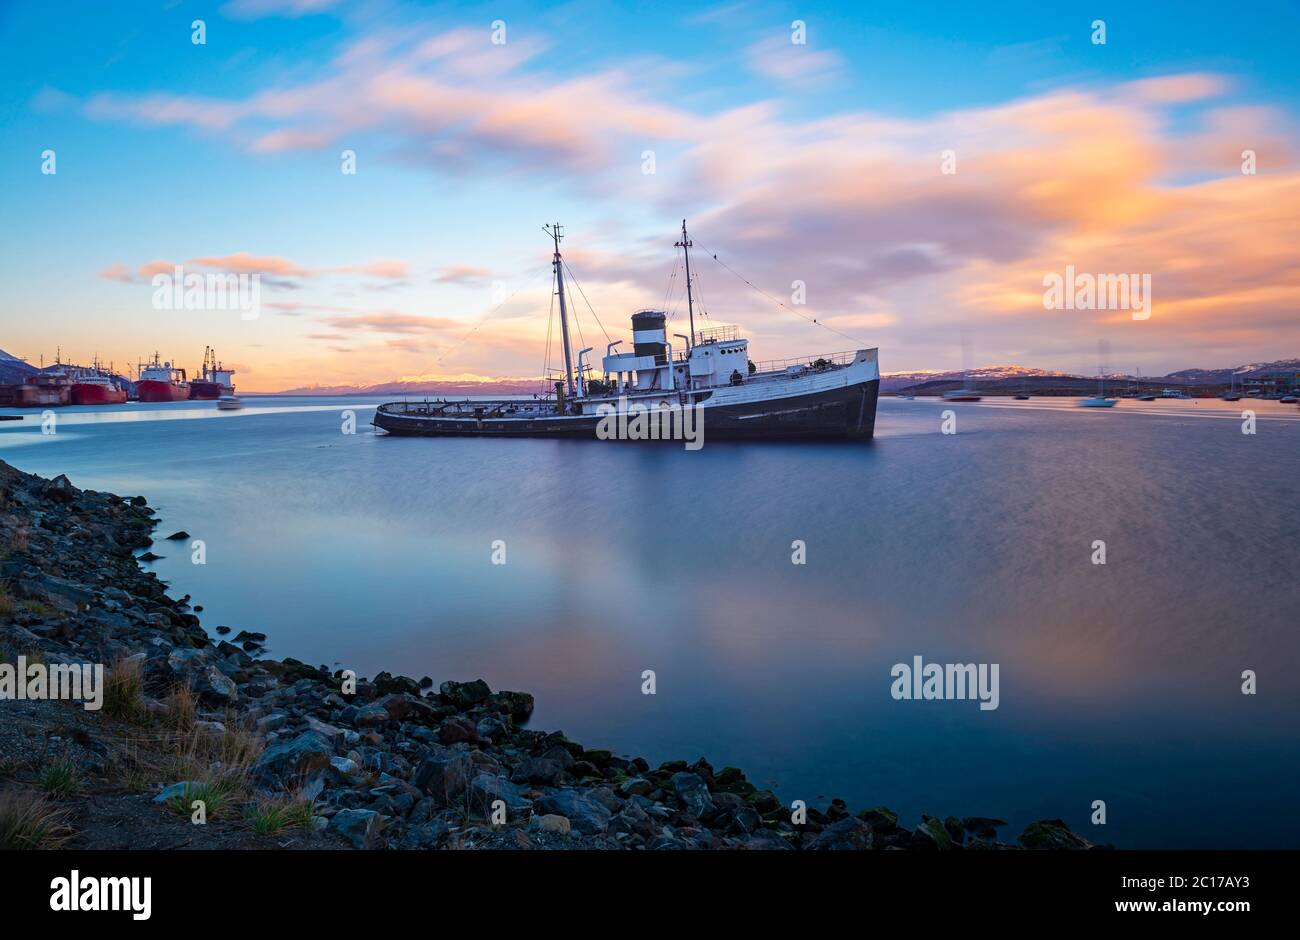 Larga exposición de un barco en el puerto de Ushuaia al atardecer, Canal Beagle, Argentina. Foto de stock